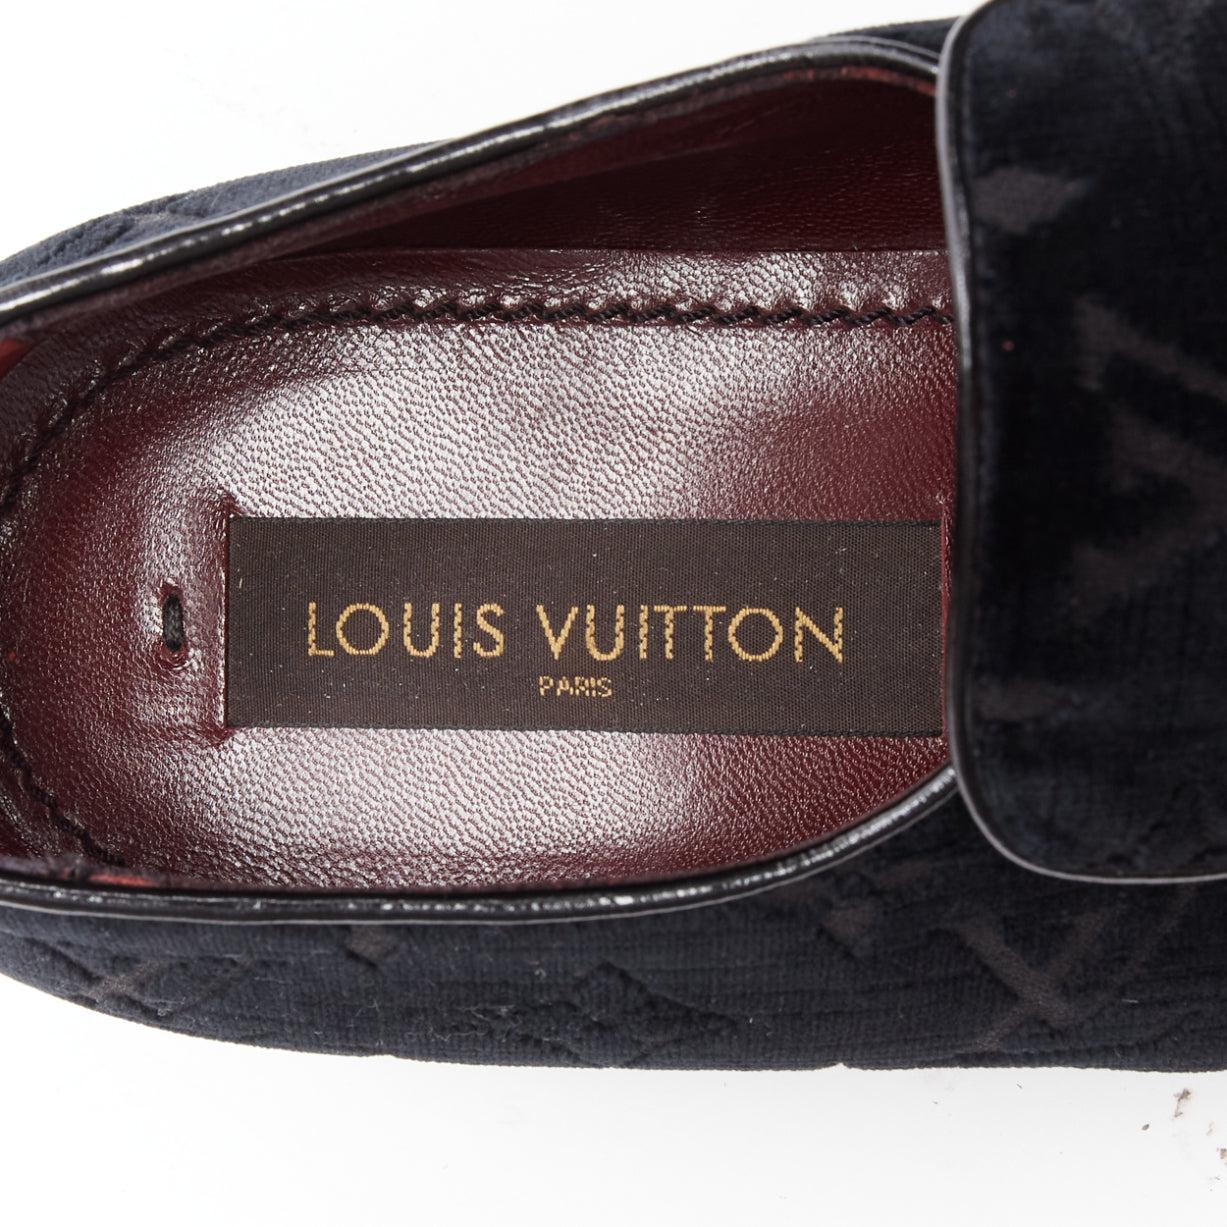 LOUIS VUITTON noir LV monogram velours Le Smoking loafer shoes UK8 EU42 5